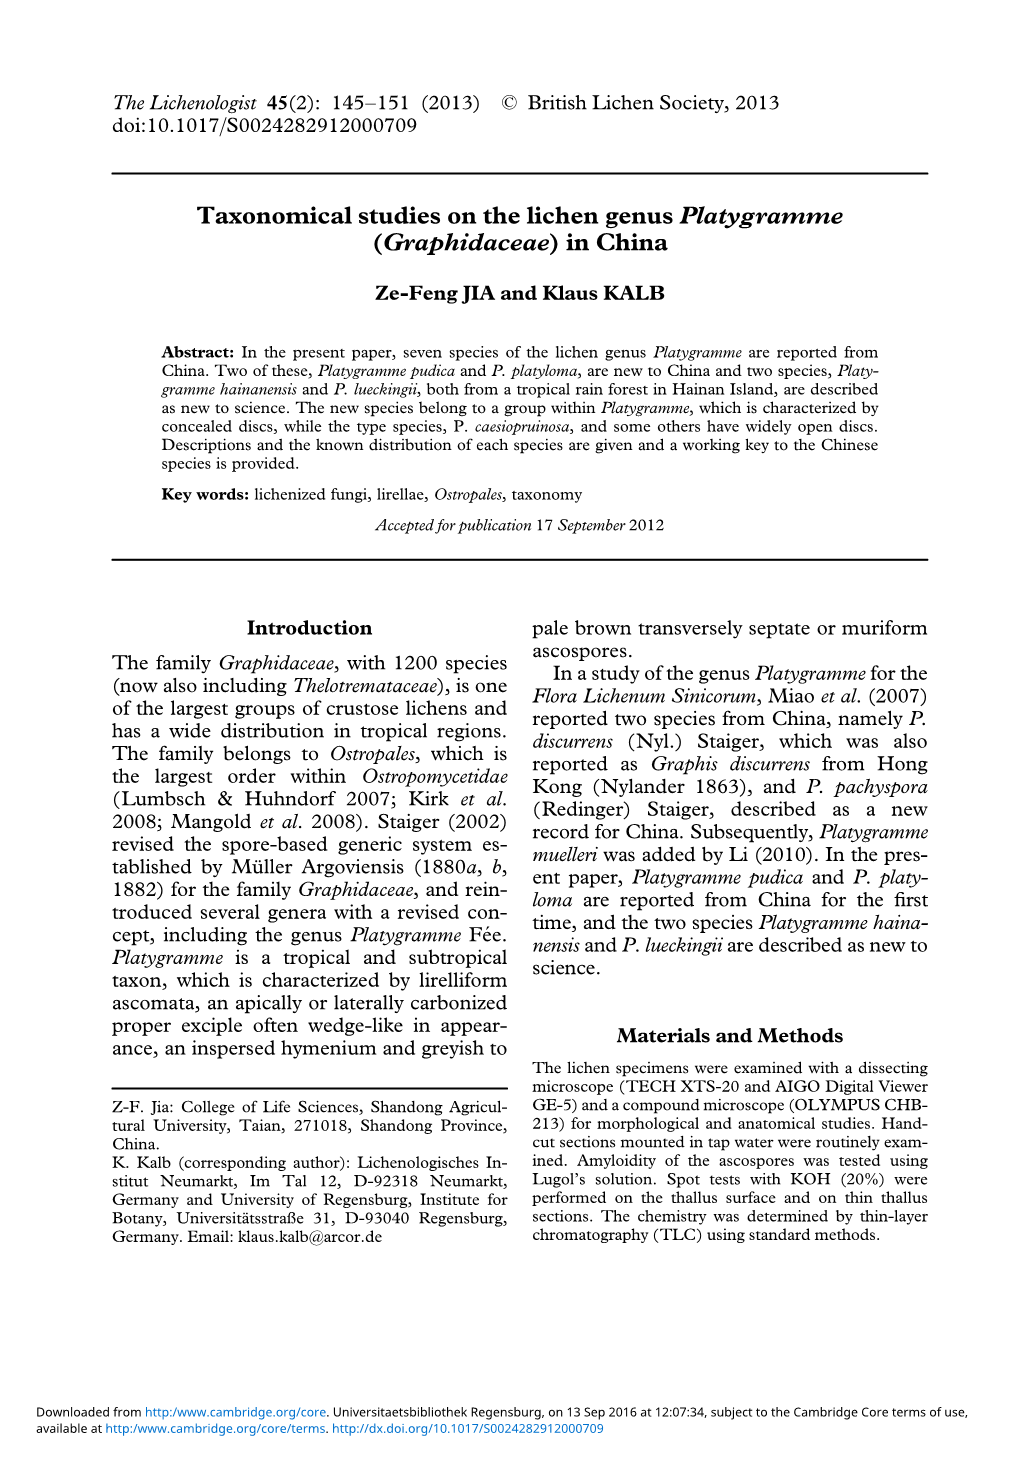 Taxonomical Studies on the Lichen Genus Platygramme (Graphidaceae) in China